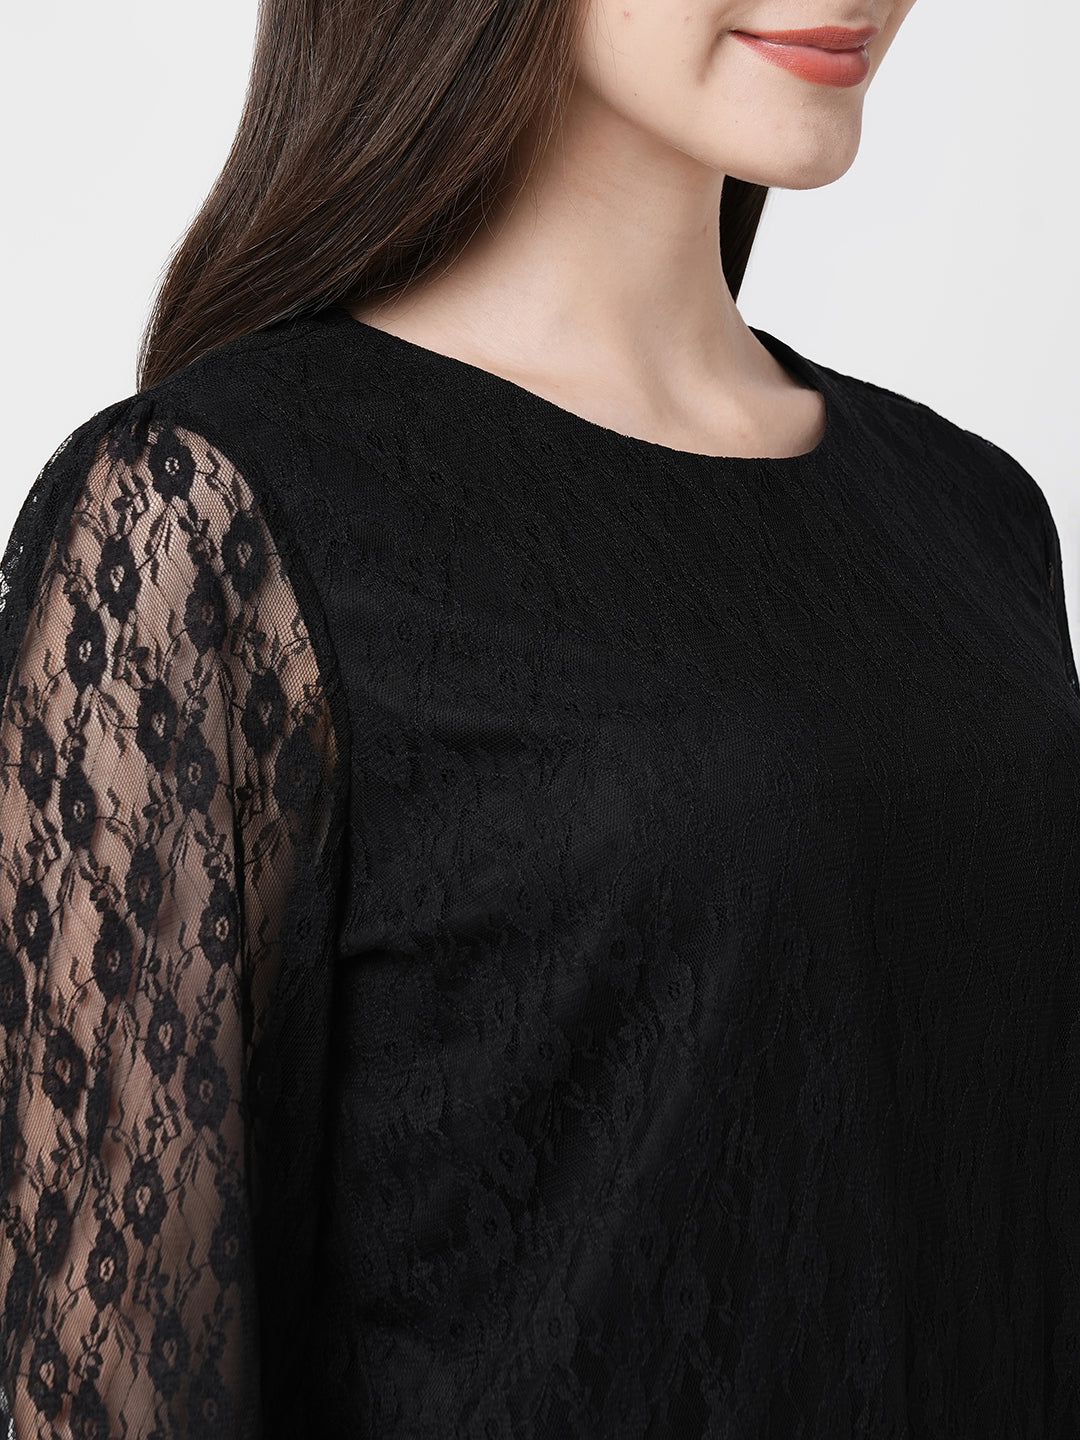 Women Black Lace Three-Quarter Sleeves Tops